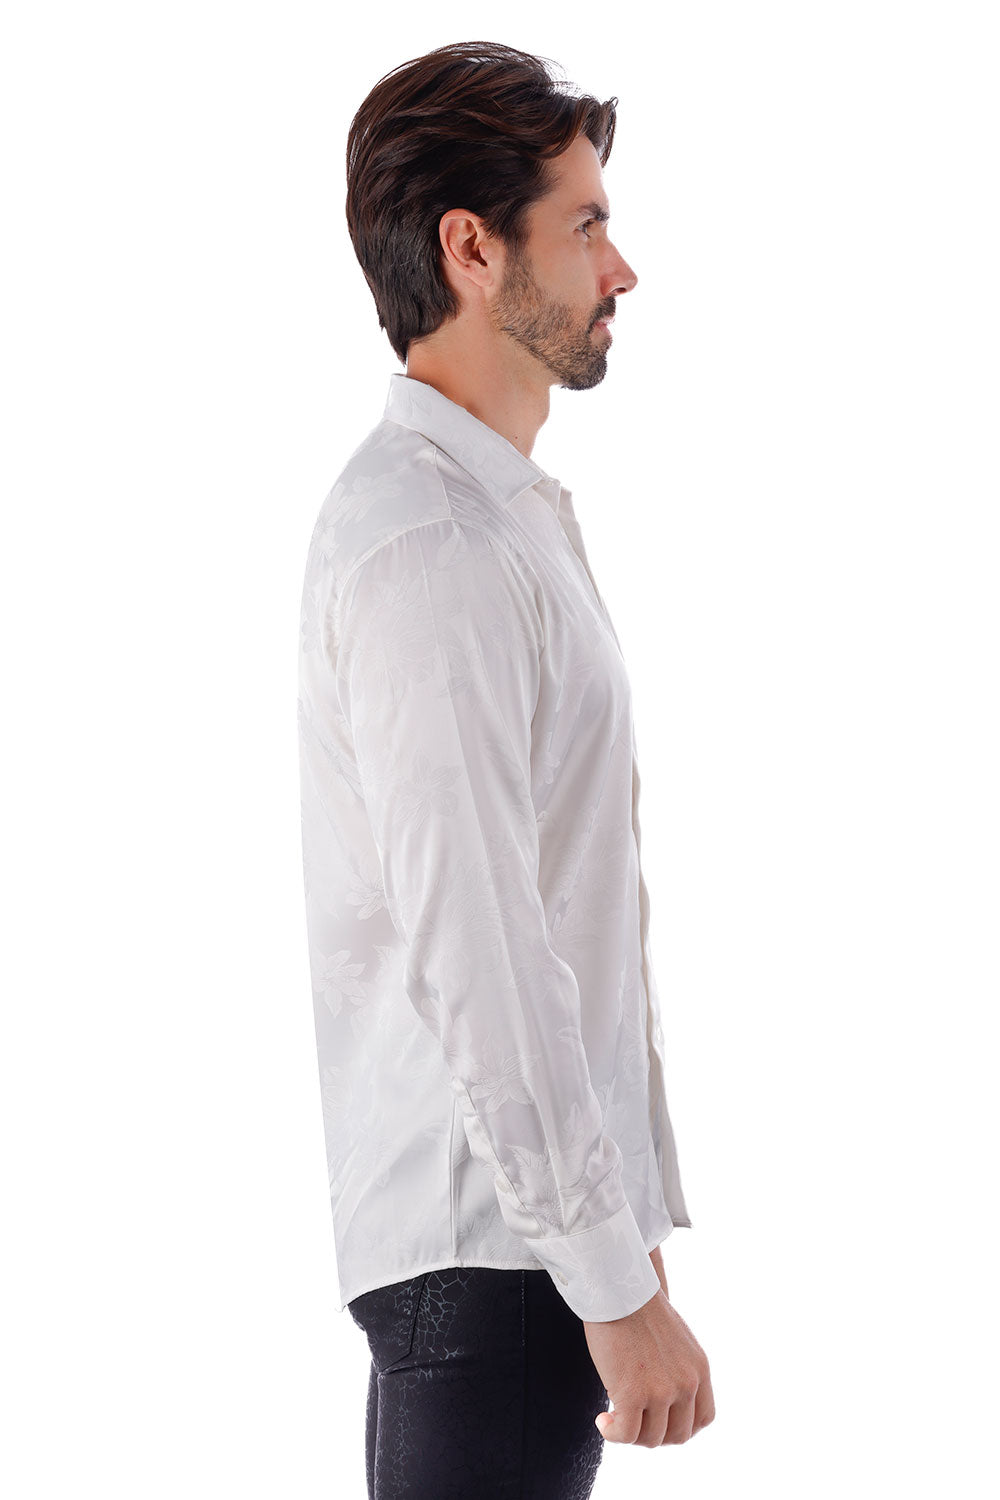 BARABAS Men's Floral Stretch Button Down Long Sleeve Shirt 4B36 White